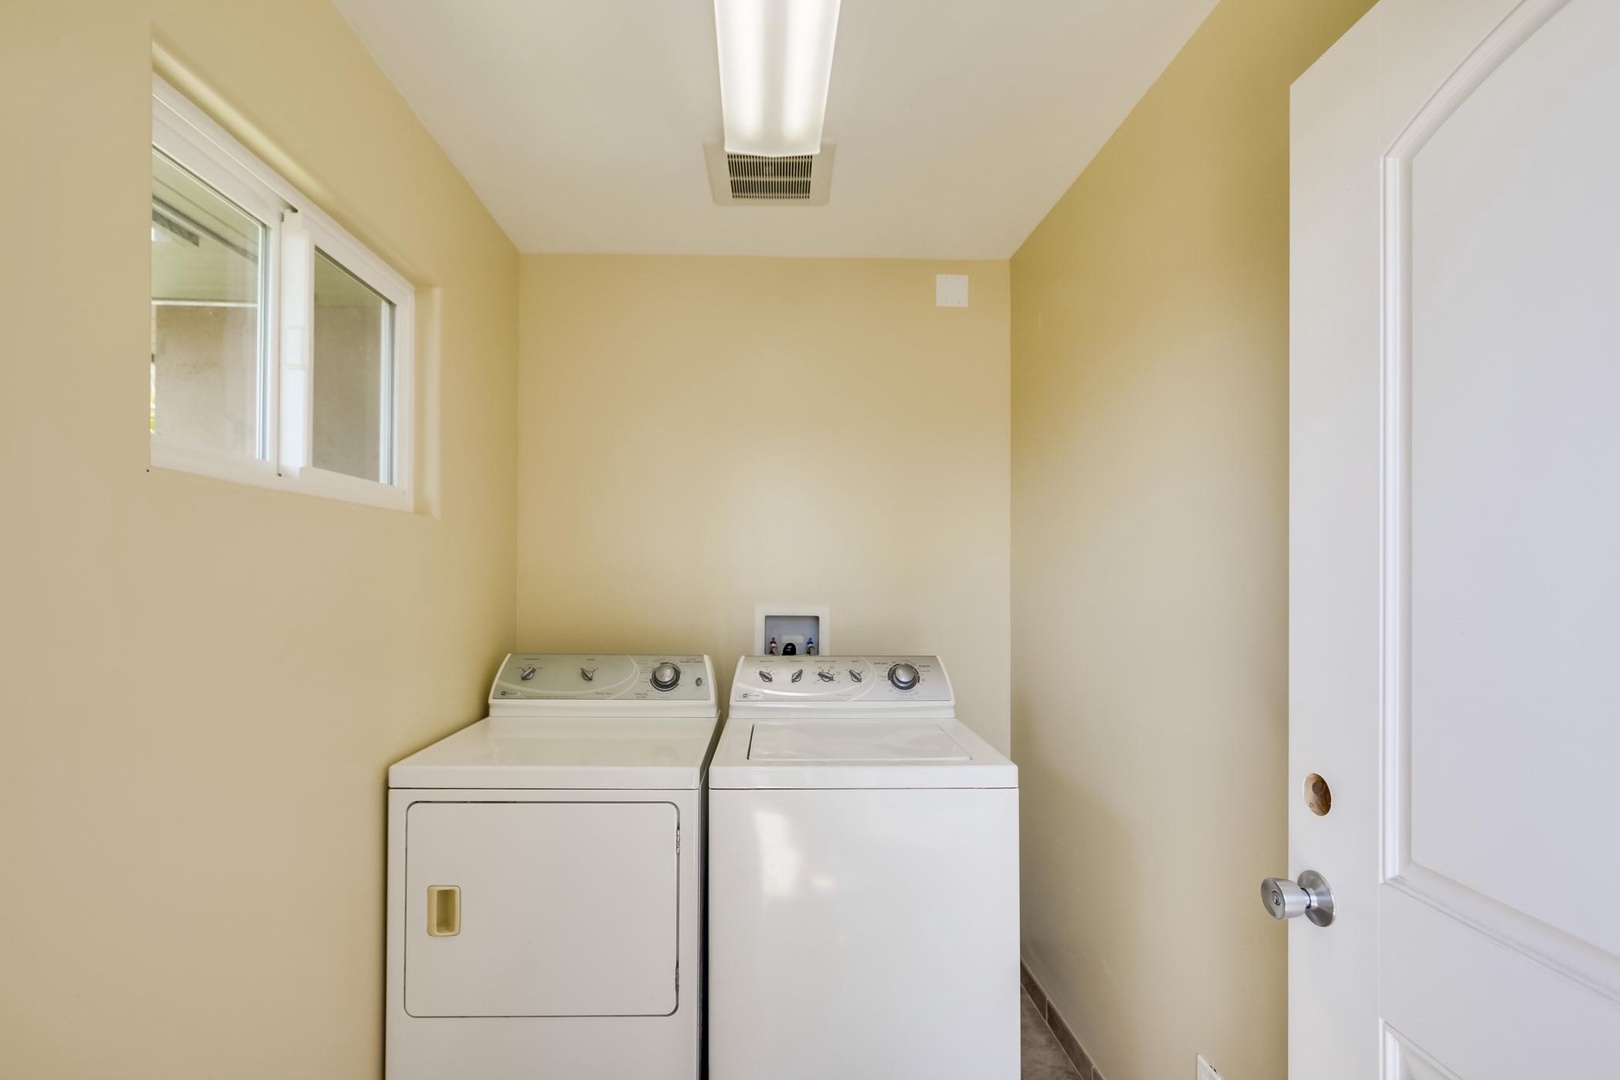 Laundry Area - Washer/Dryer